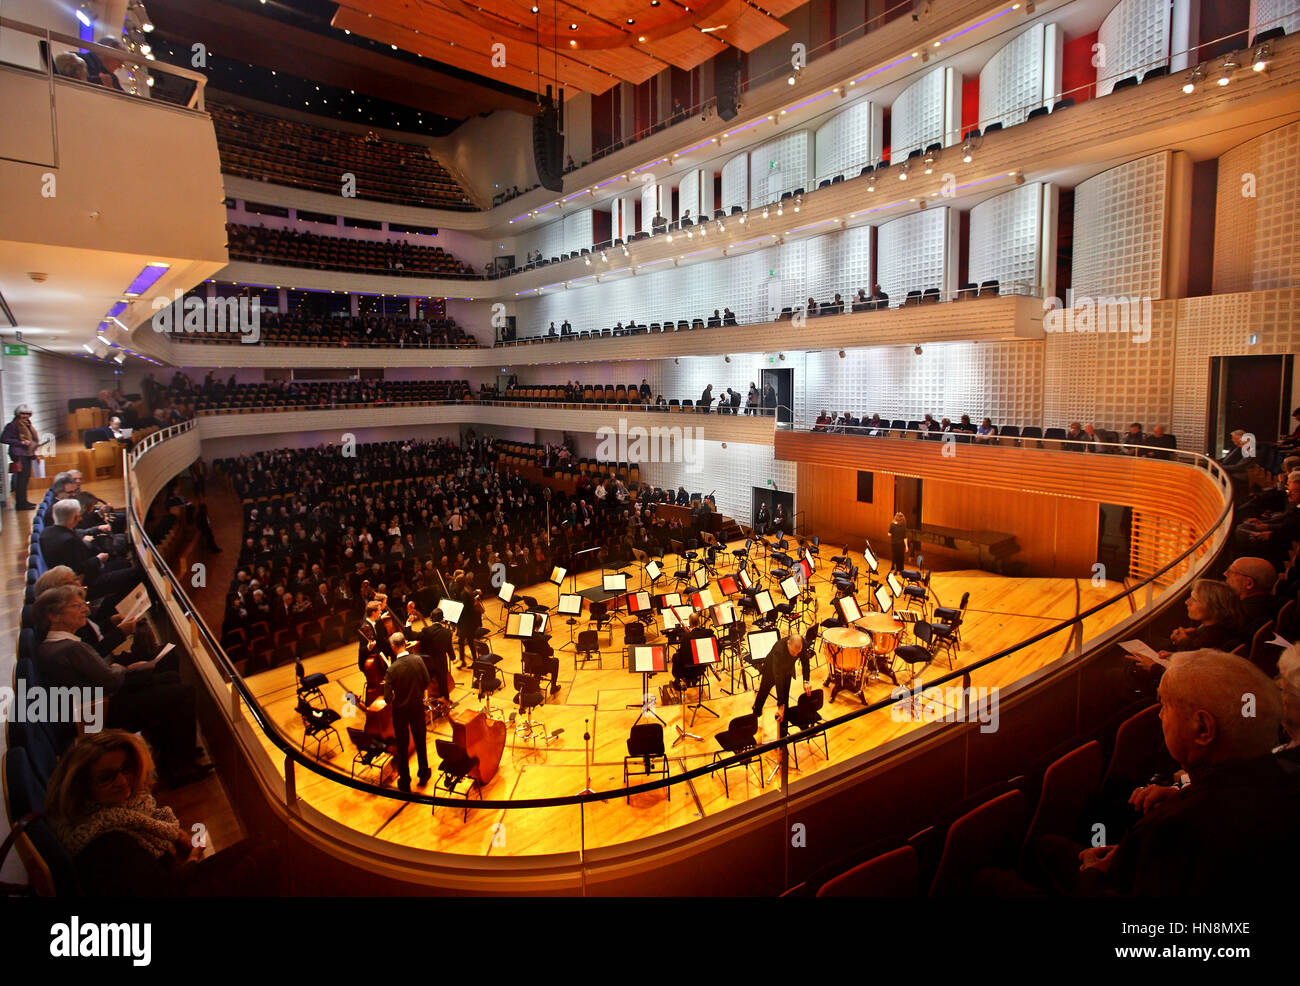 El Concert Hall en el KKL (Kultur- und Kongresszentrum Luzern), Lucerna, Suiza. Foto de stock